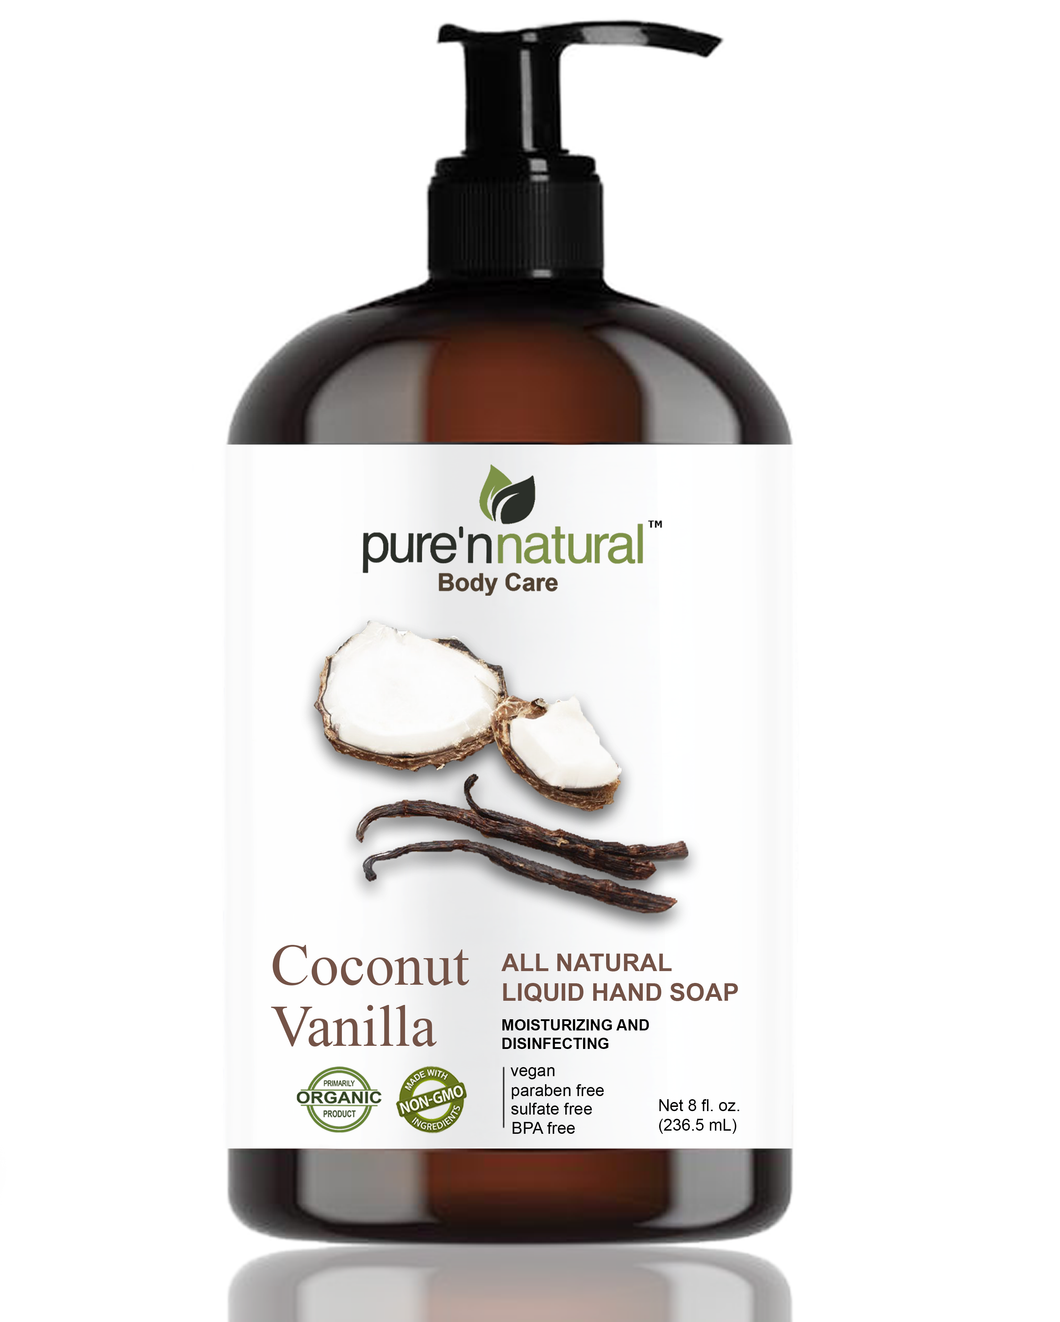 Coconut Vanilla Liquid Hand Soap, Moisturizing & Disinfecting, Organic and All Natural, 8 oz